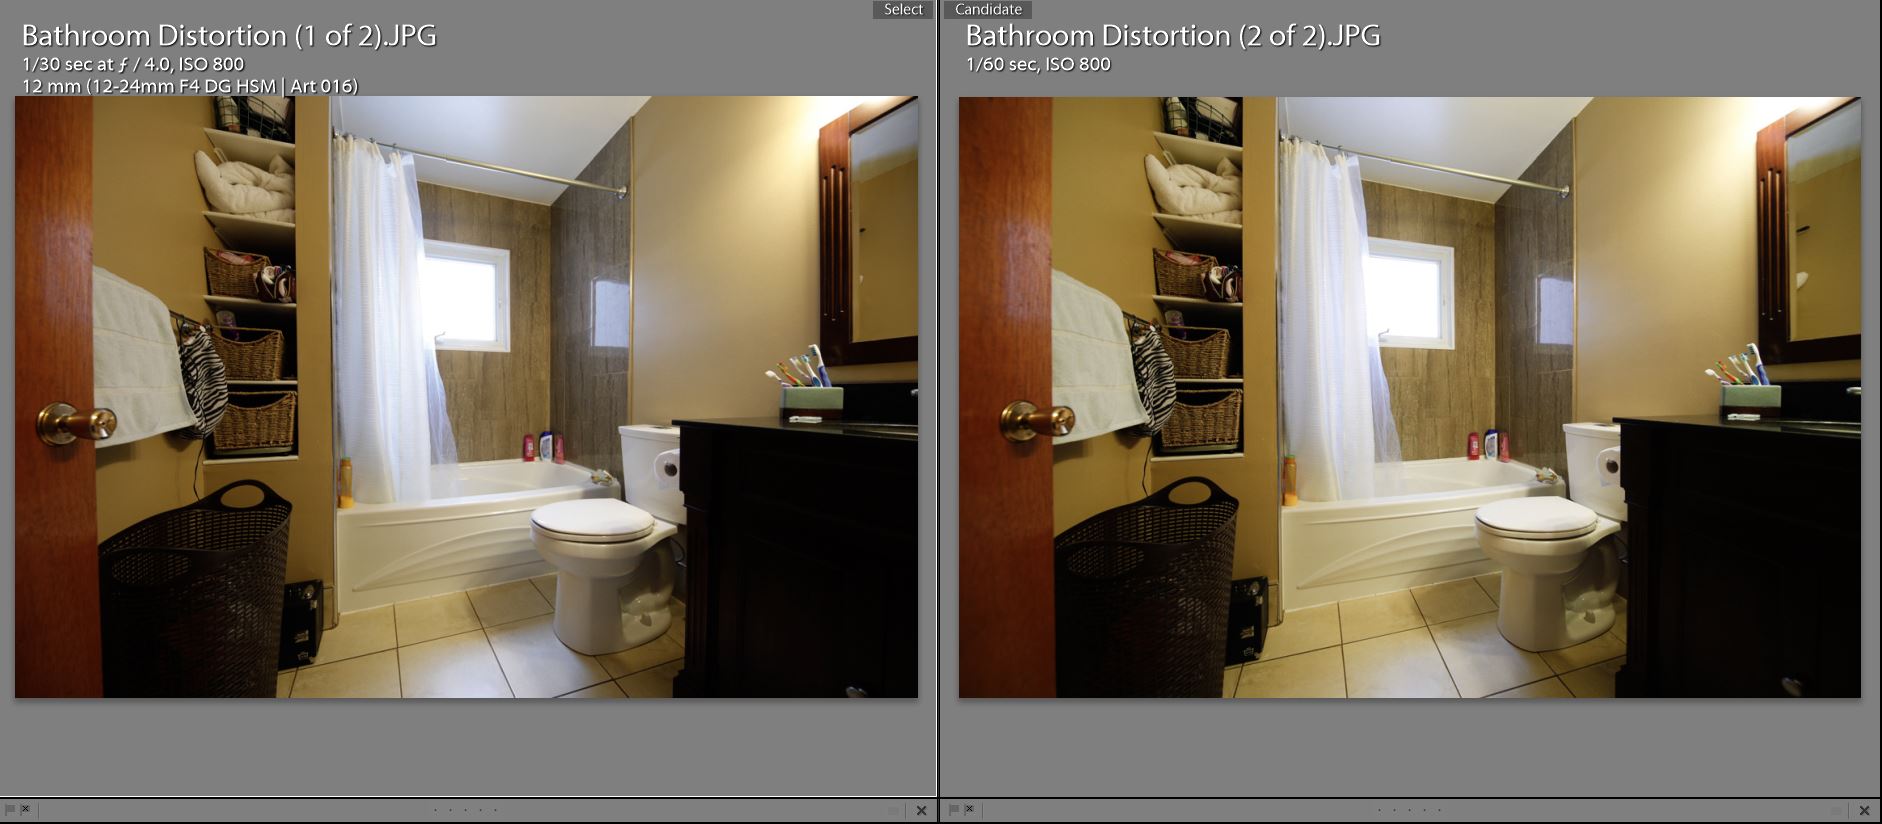 Bathroom Distortion